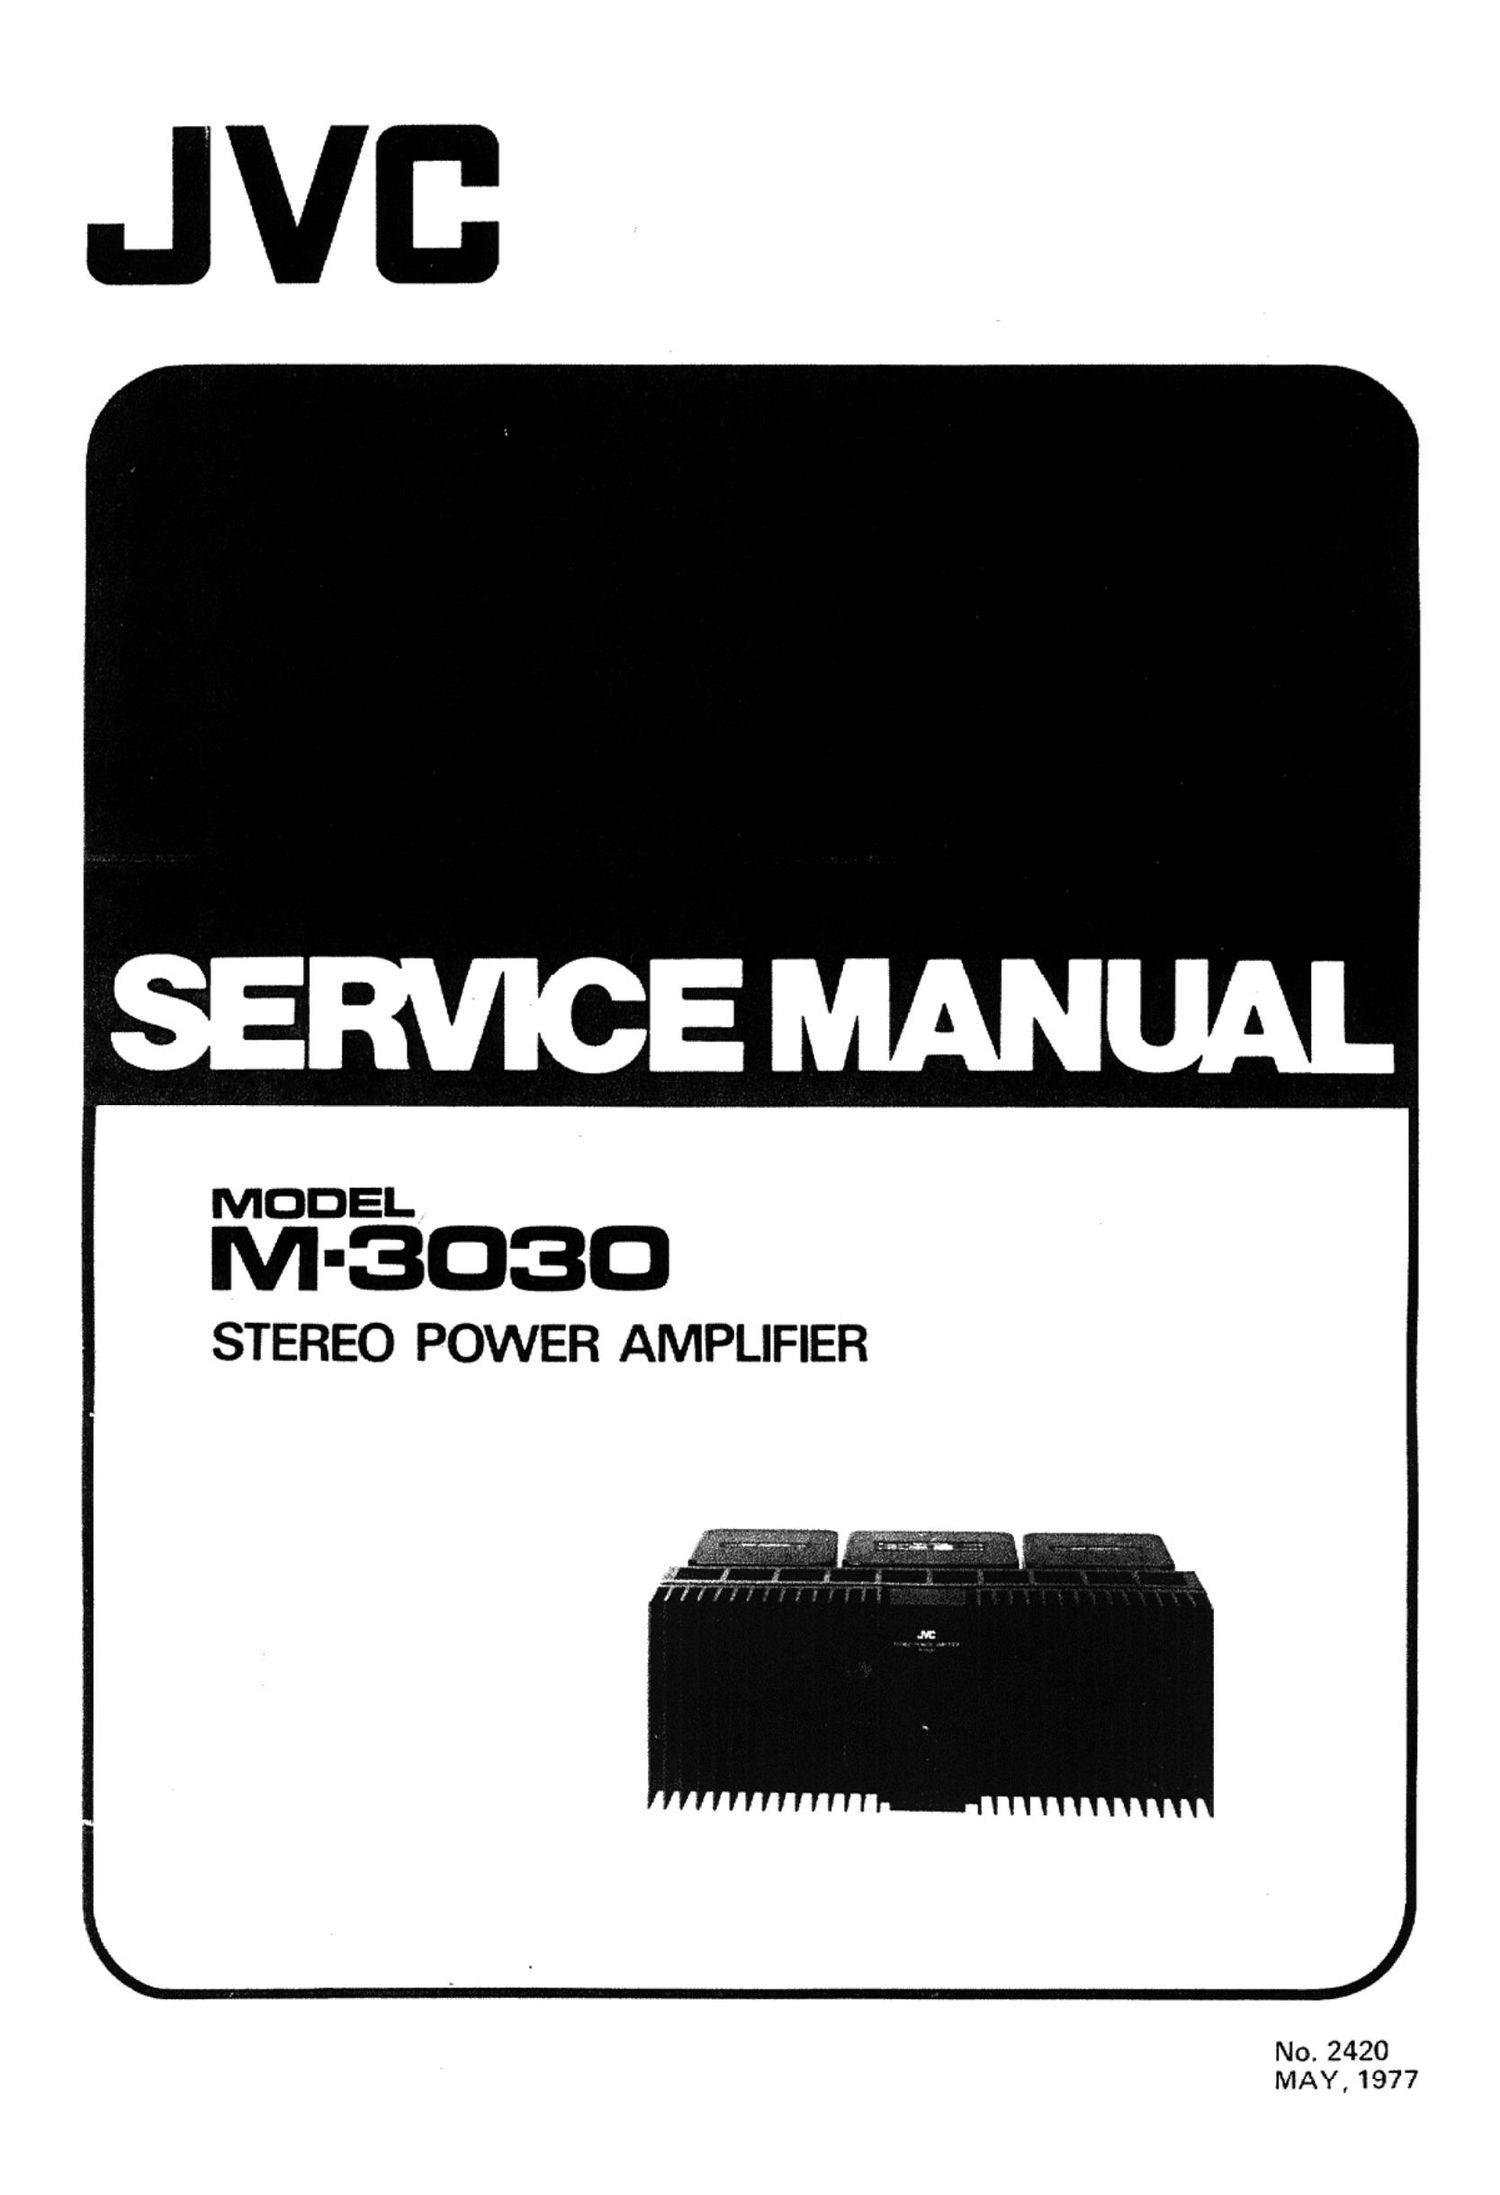 Jvc M 3030 Service Manual